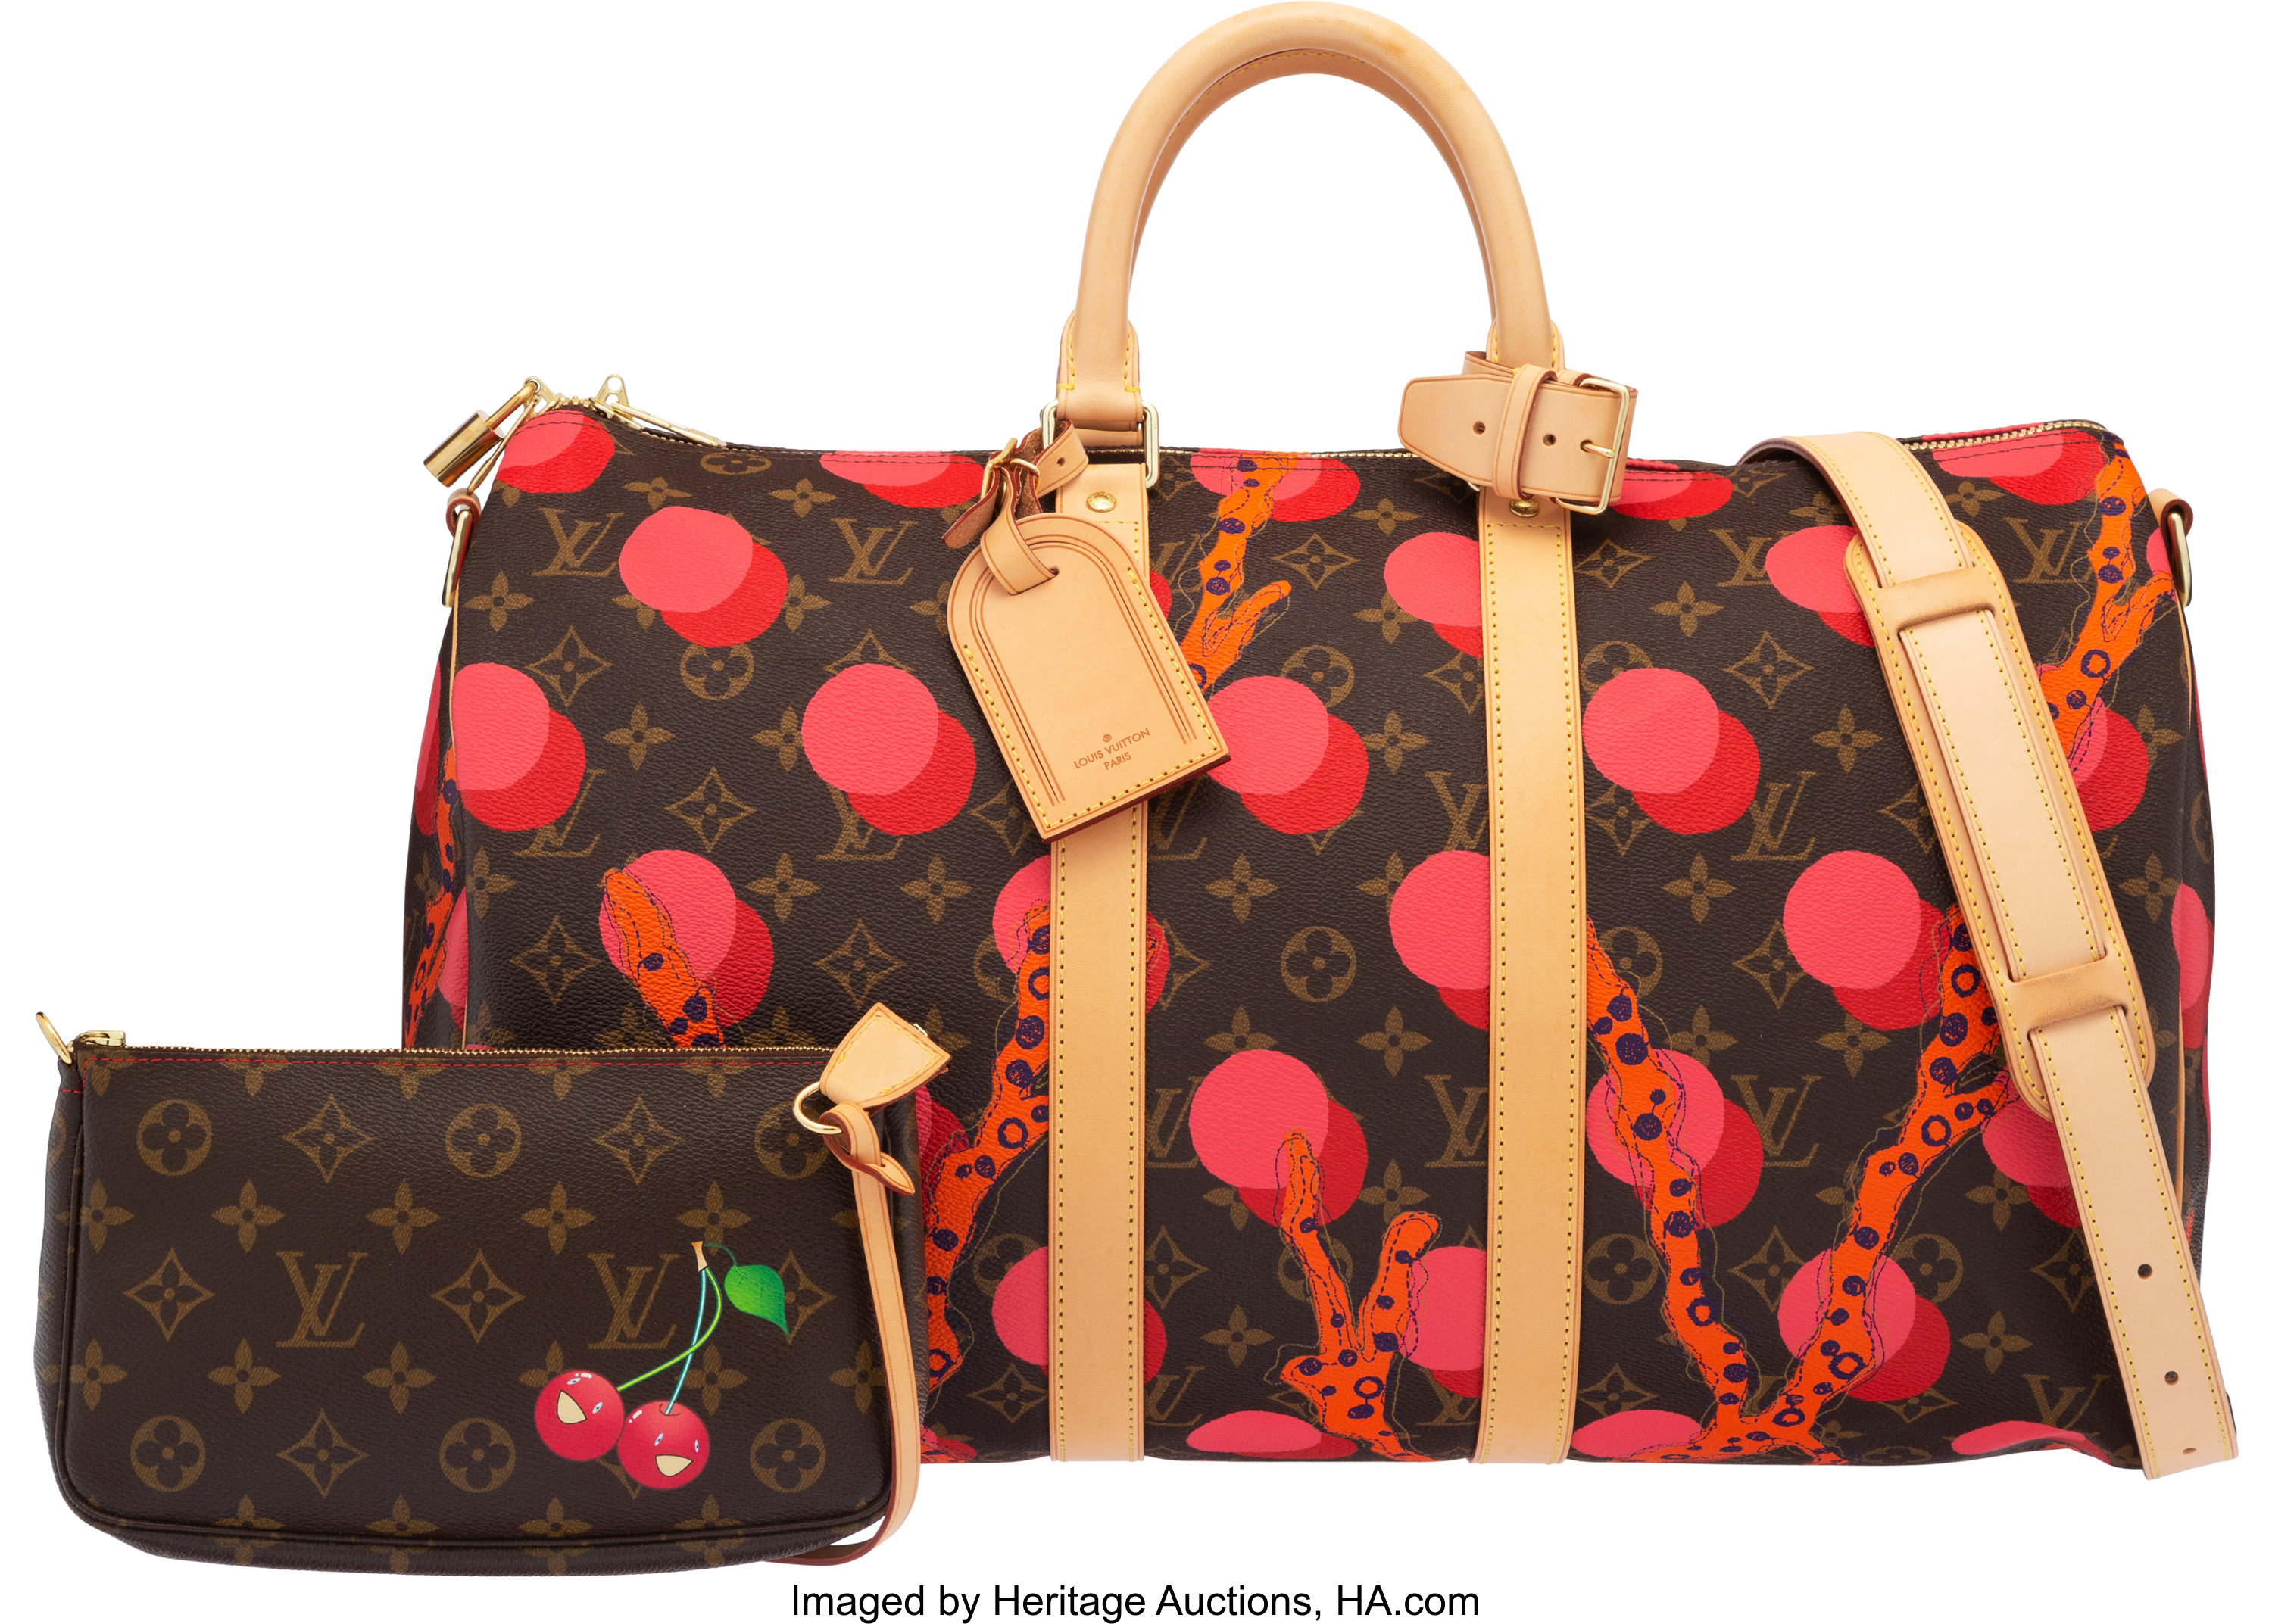 Sold at Auction: Louis Vuitton, Louis Vuitton Keepall Bandouliere Duffle Bag